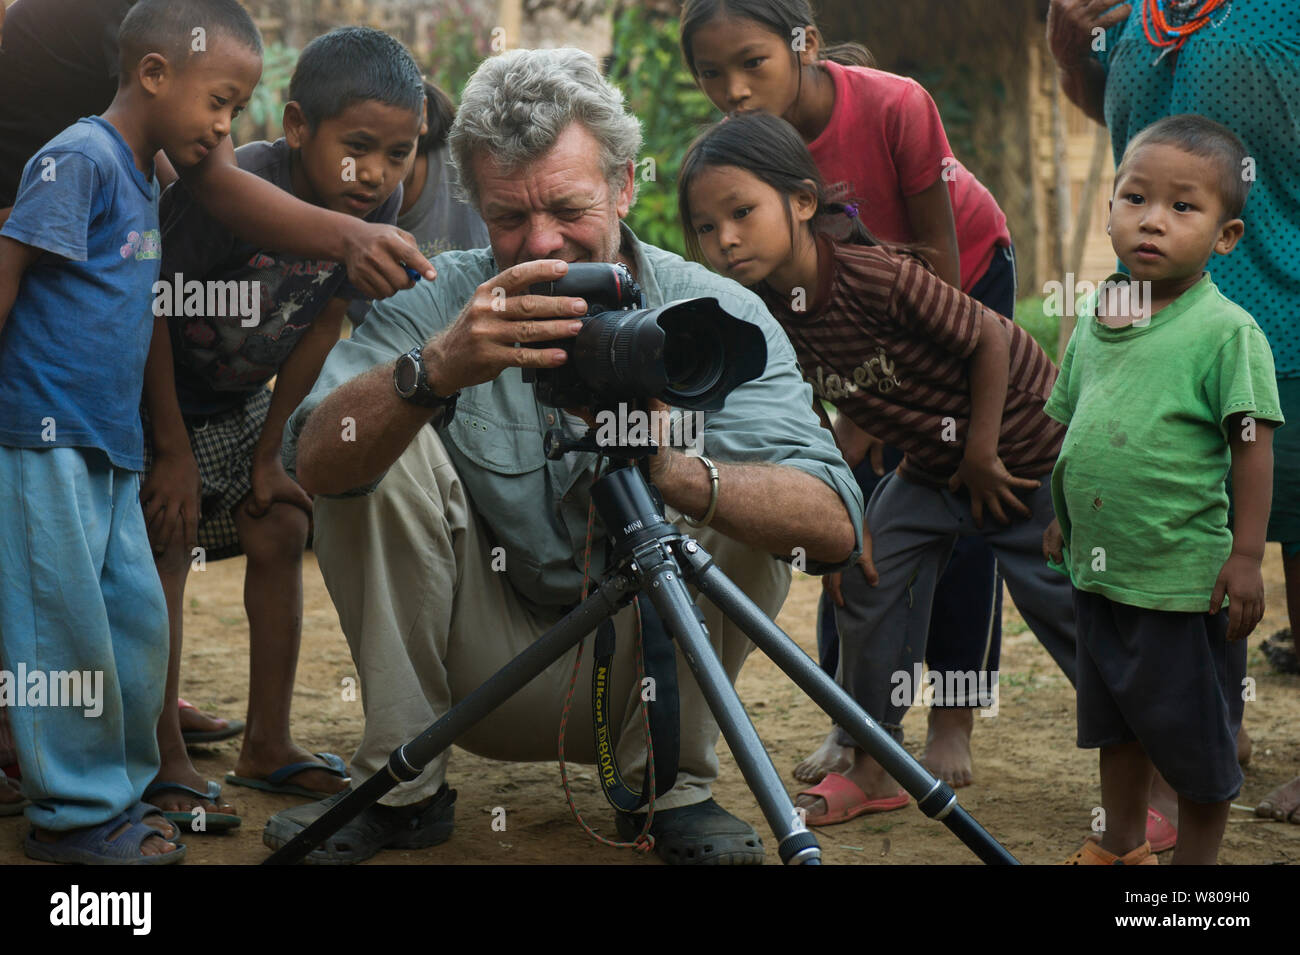 Fotograf Peter Oxford mit Naga head hunters Kinder beobachten ihn Fotos zu machen. Nagaland, North East India, Oktober 2014. Stockfoto